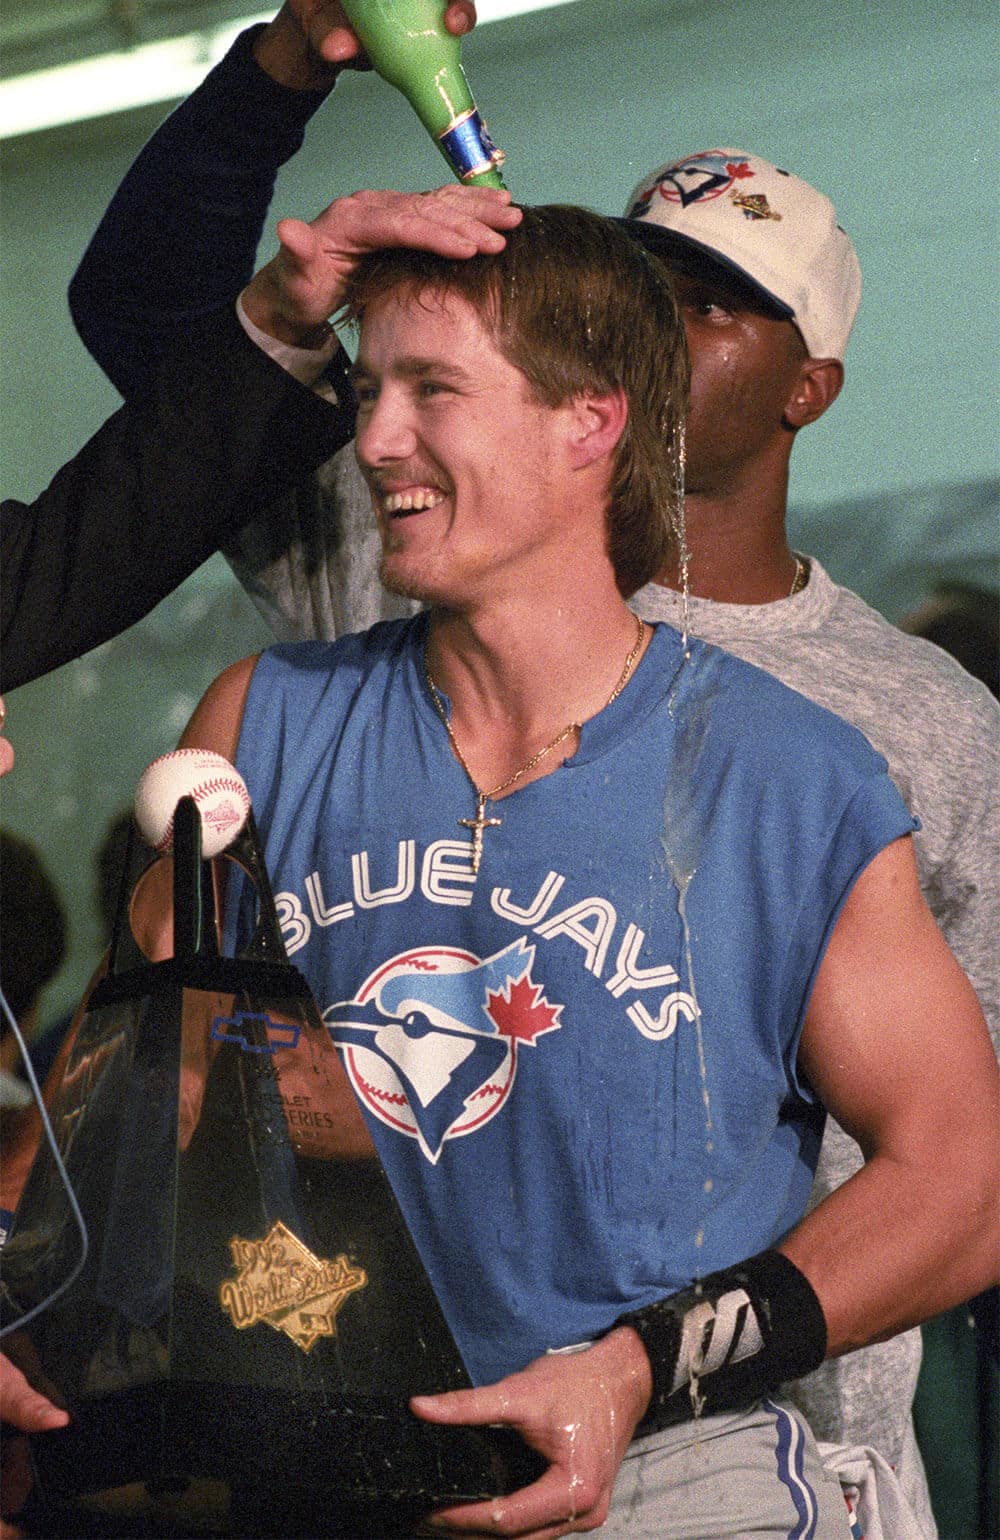 1992 World Series MVP Pat Borders of the Toronto Blue Jays